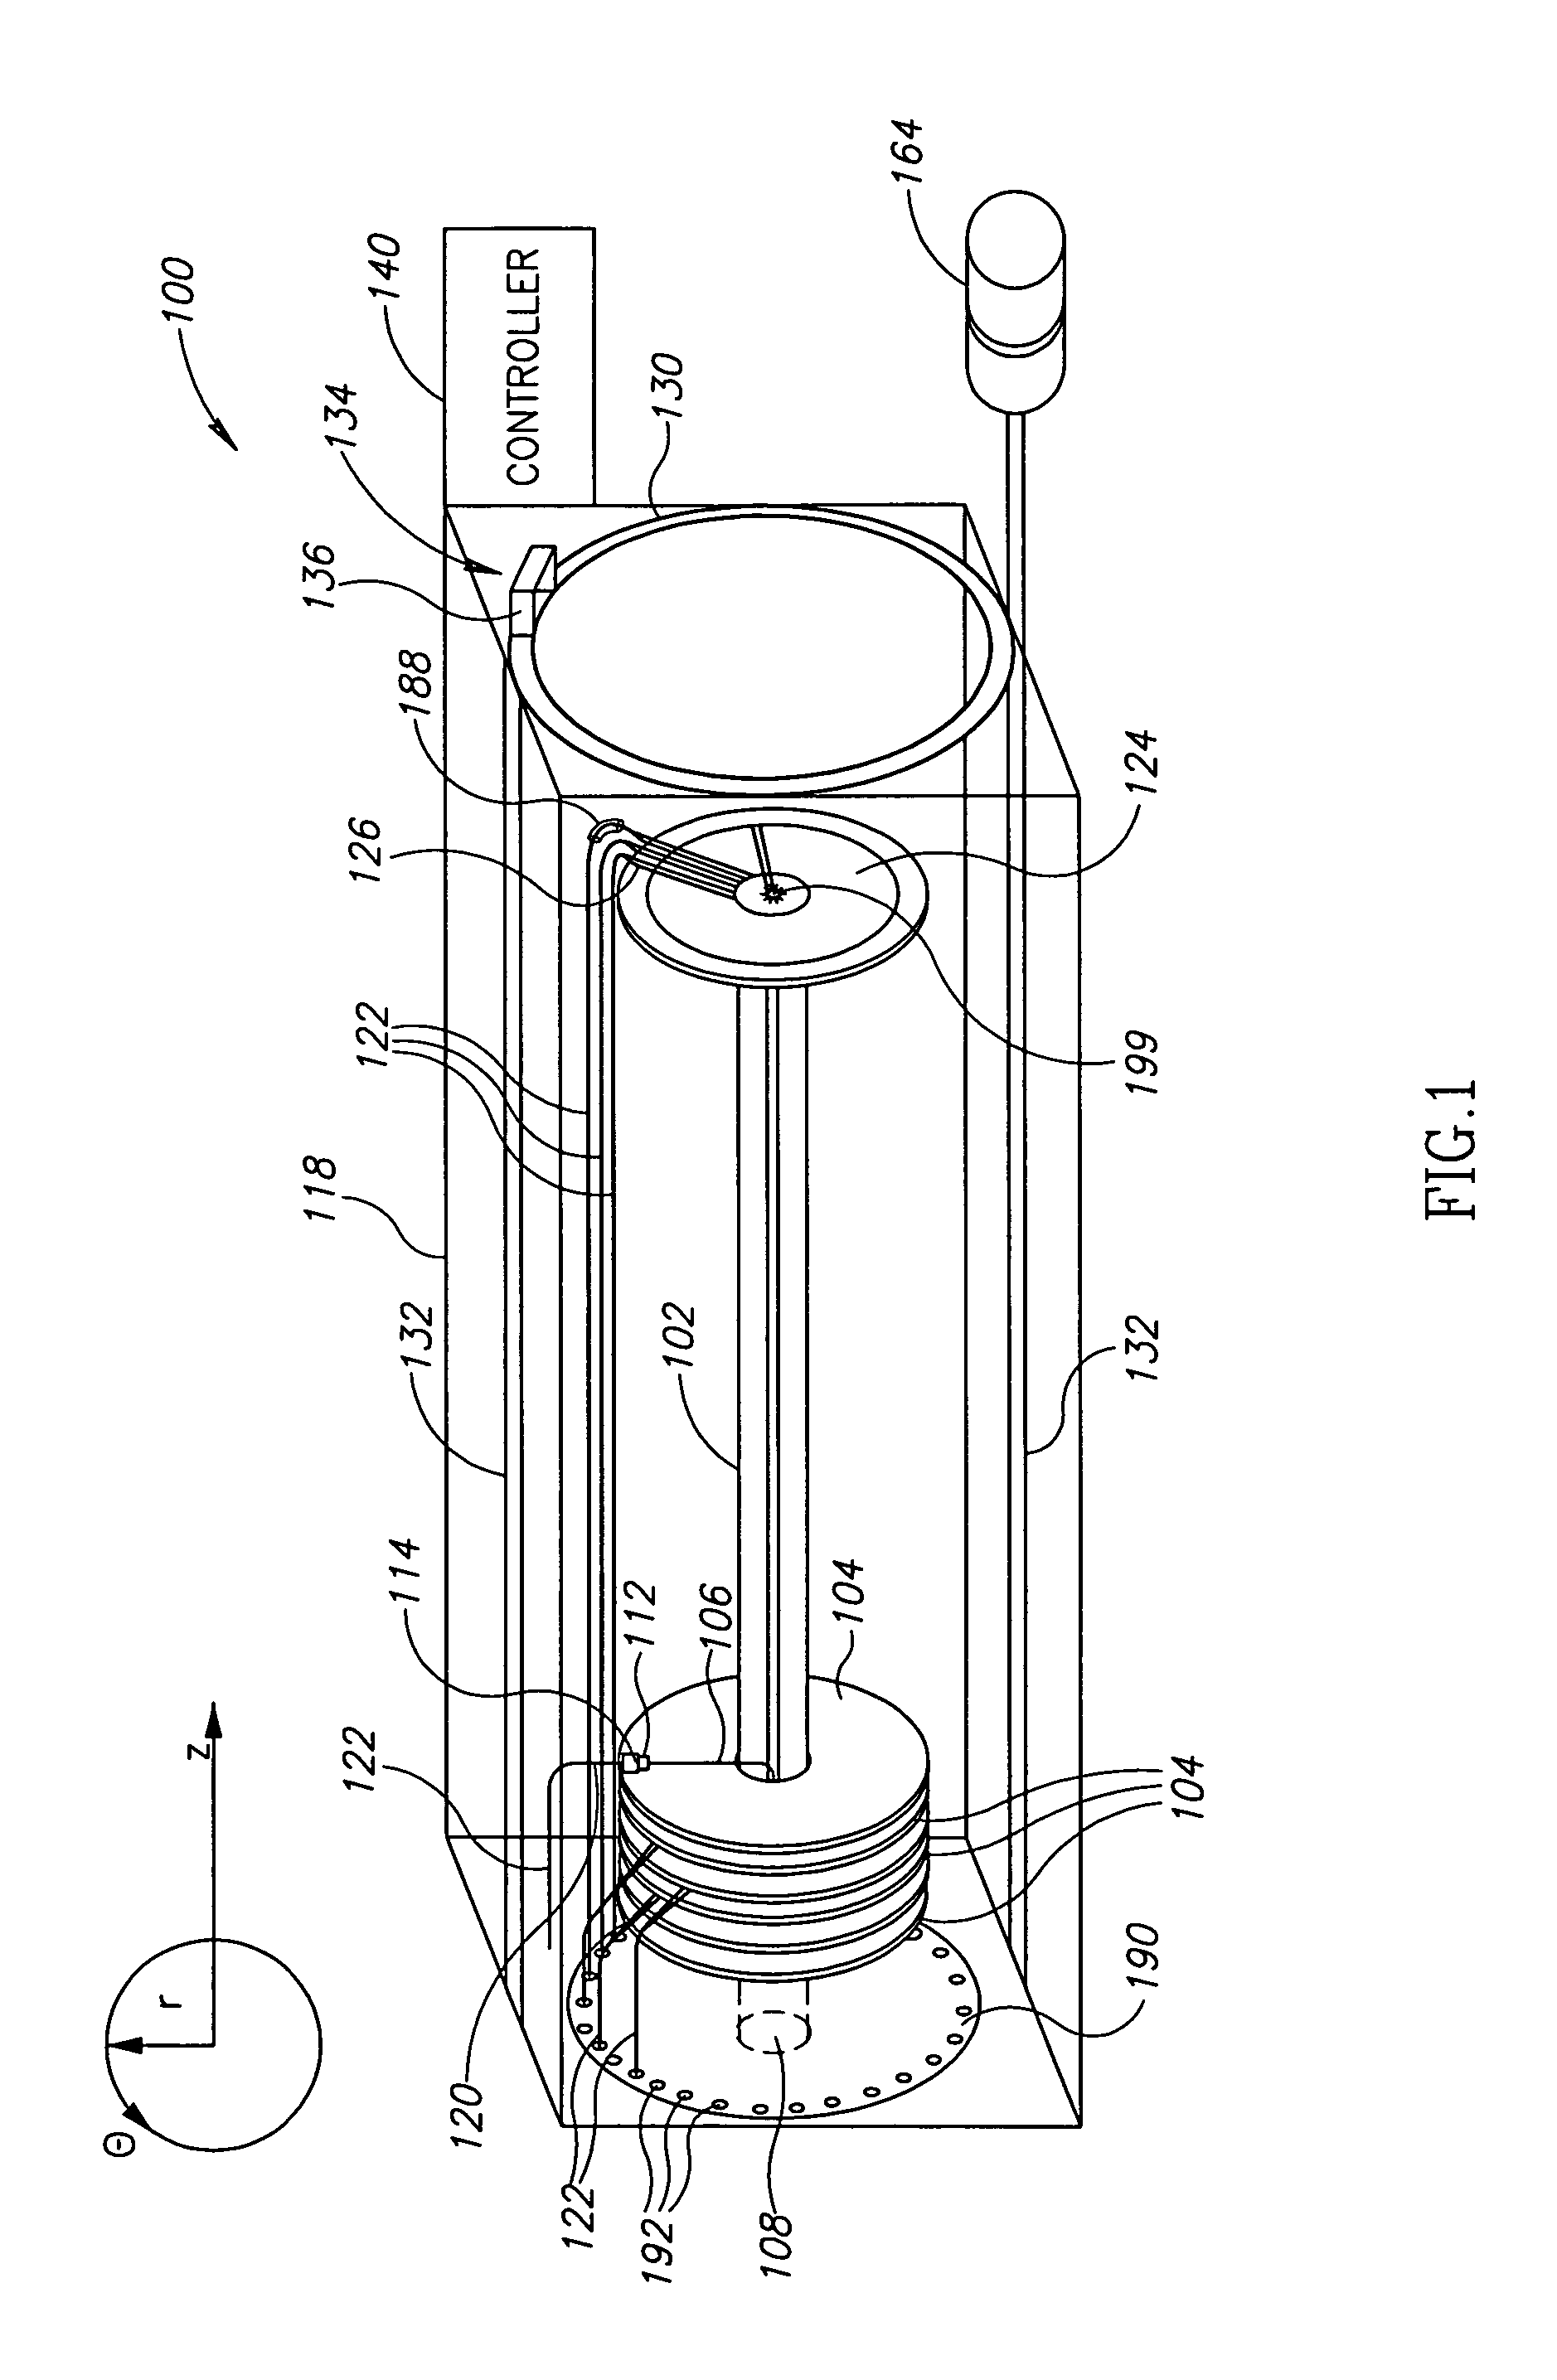 Mechanical optical switch